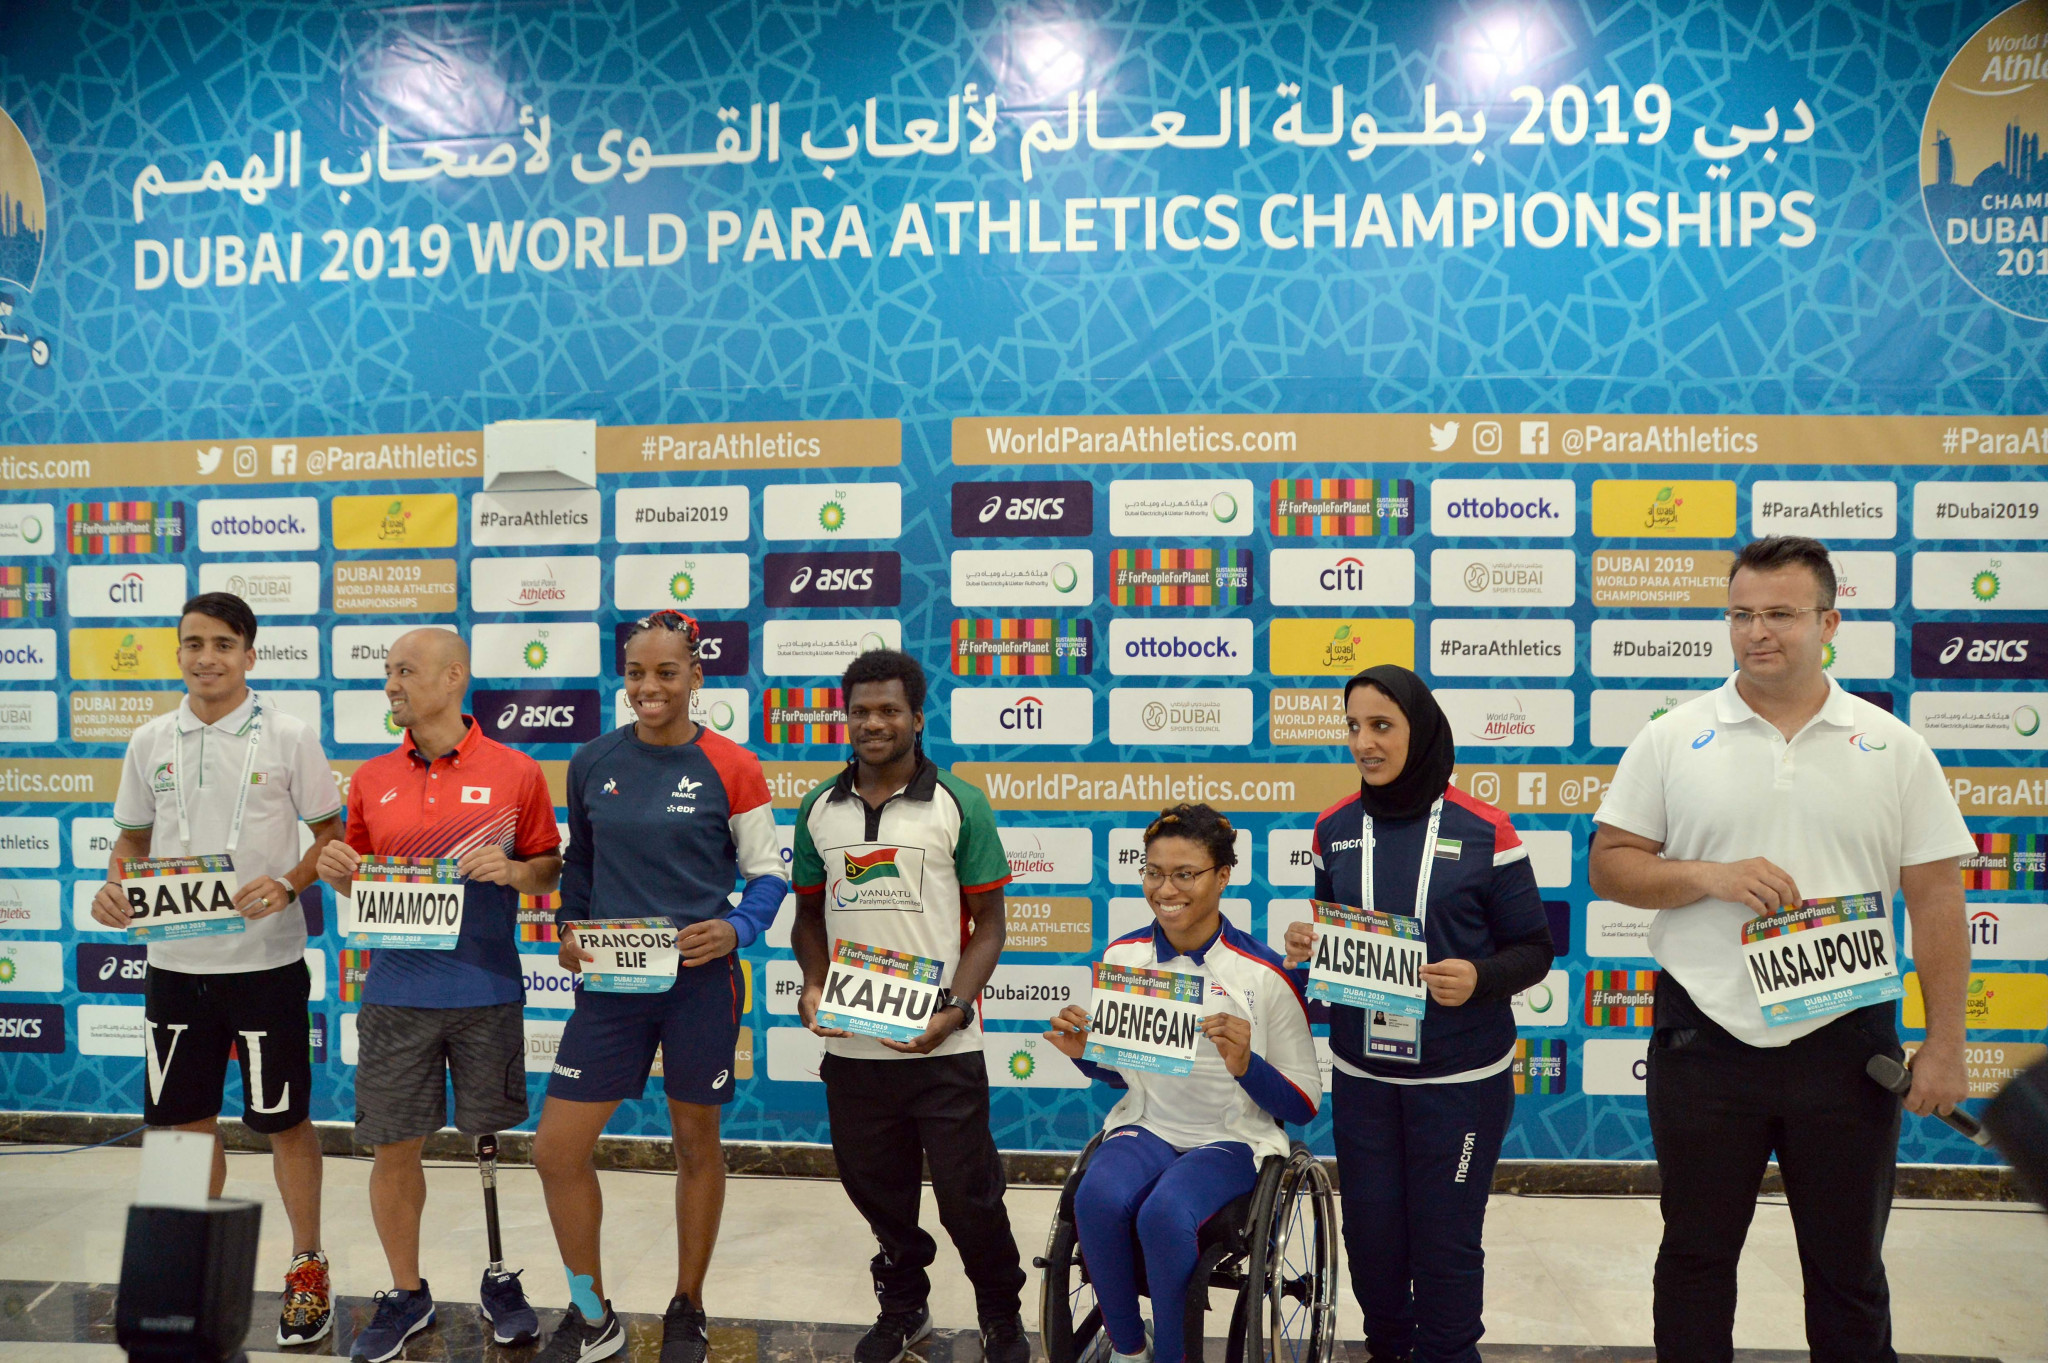 World Para Athletics Championships to promote UN Sustainable Development Goals 